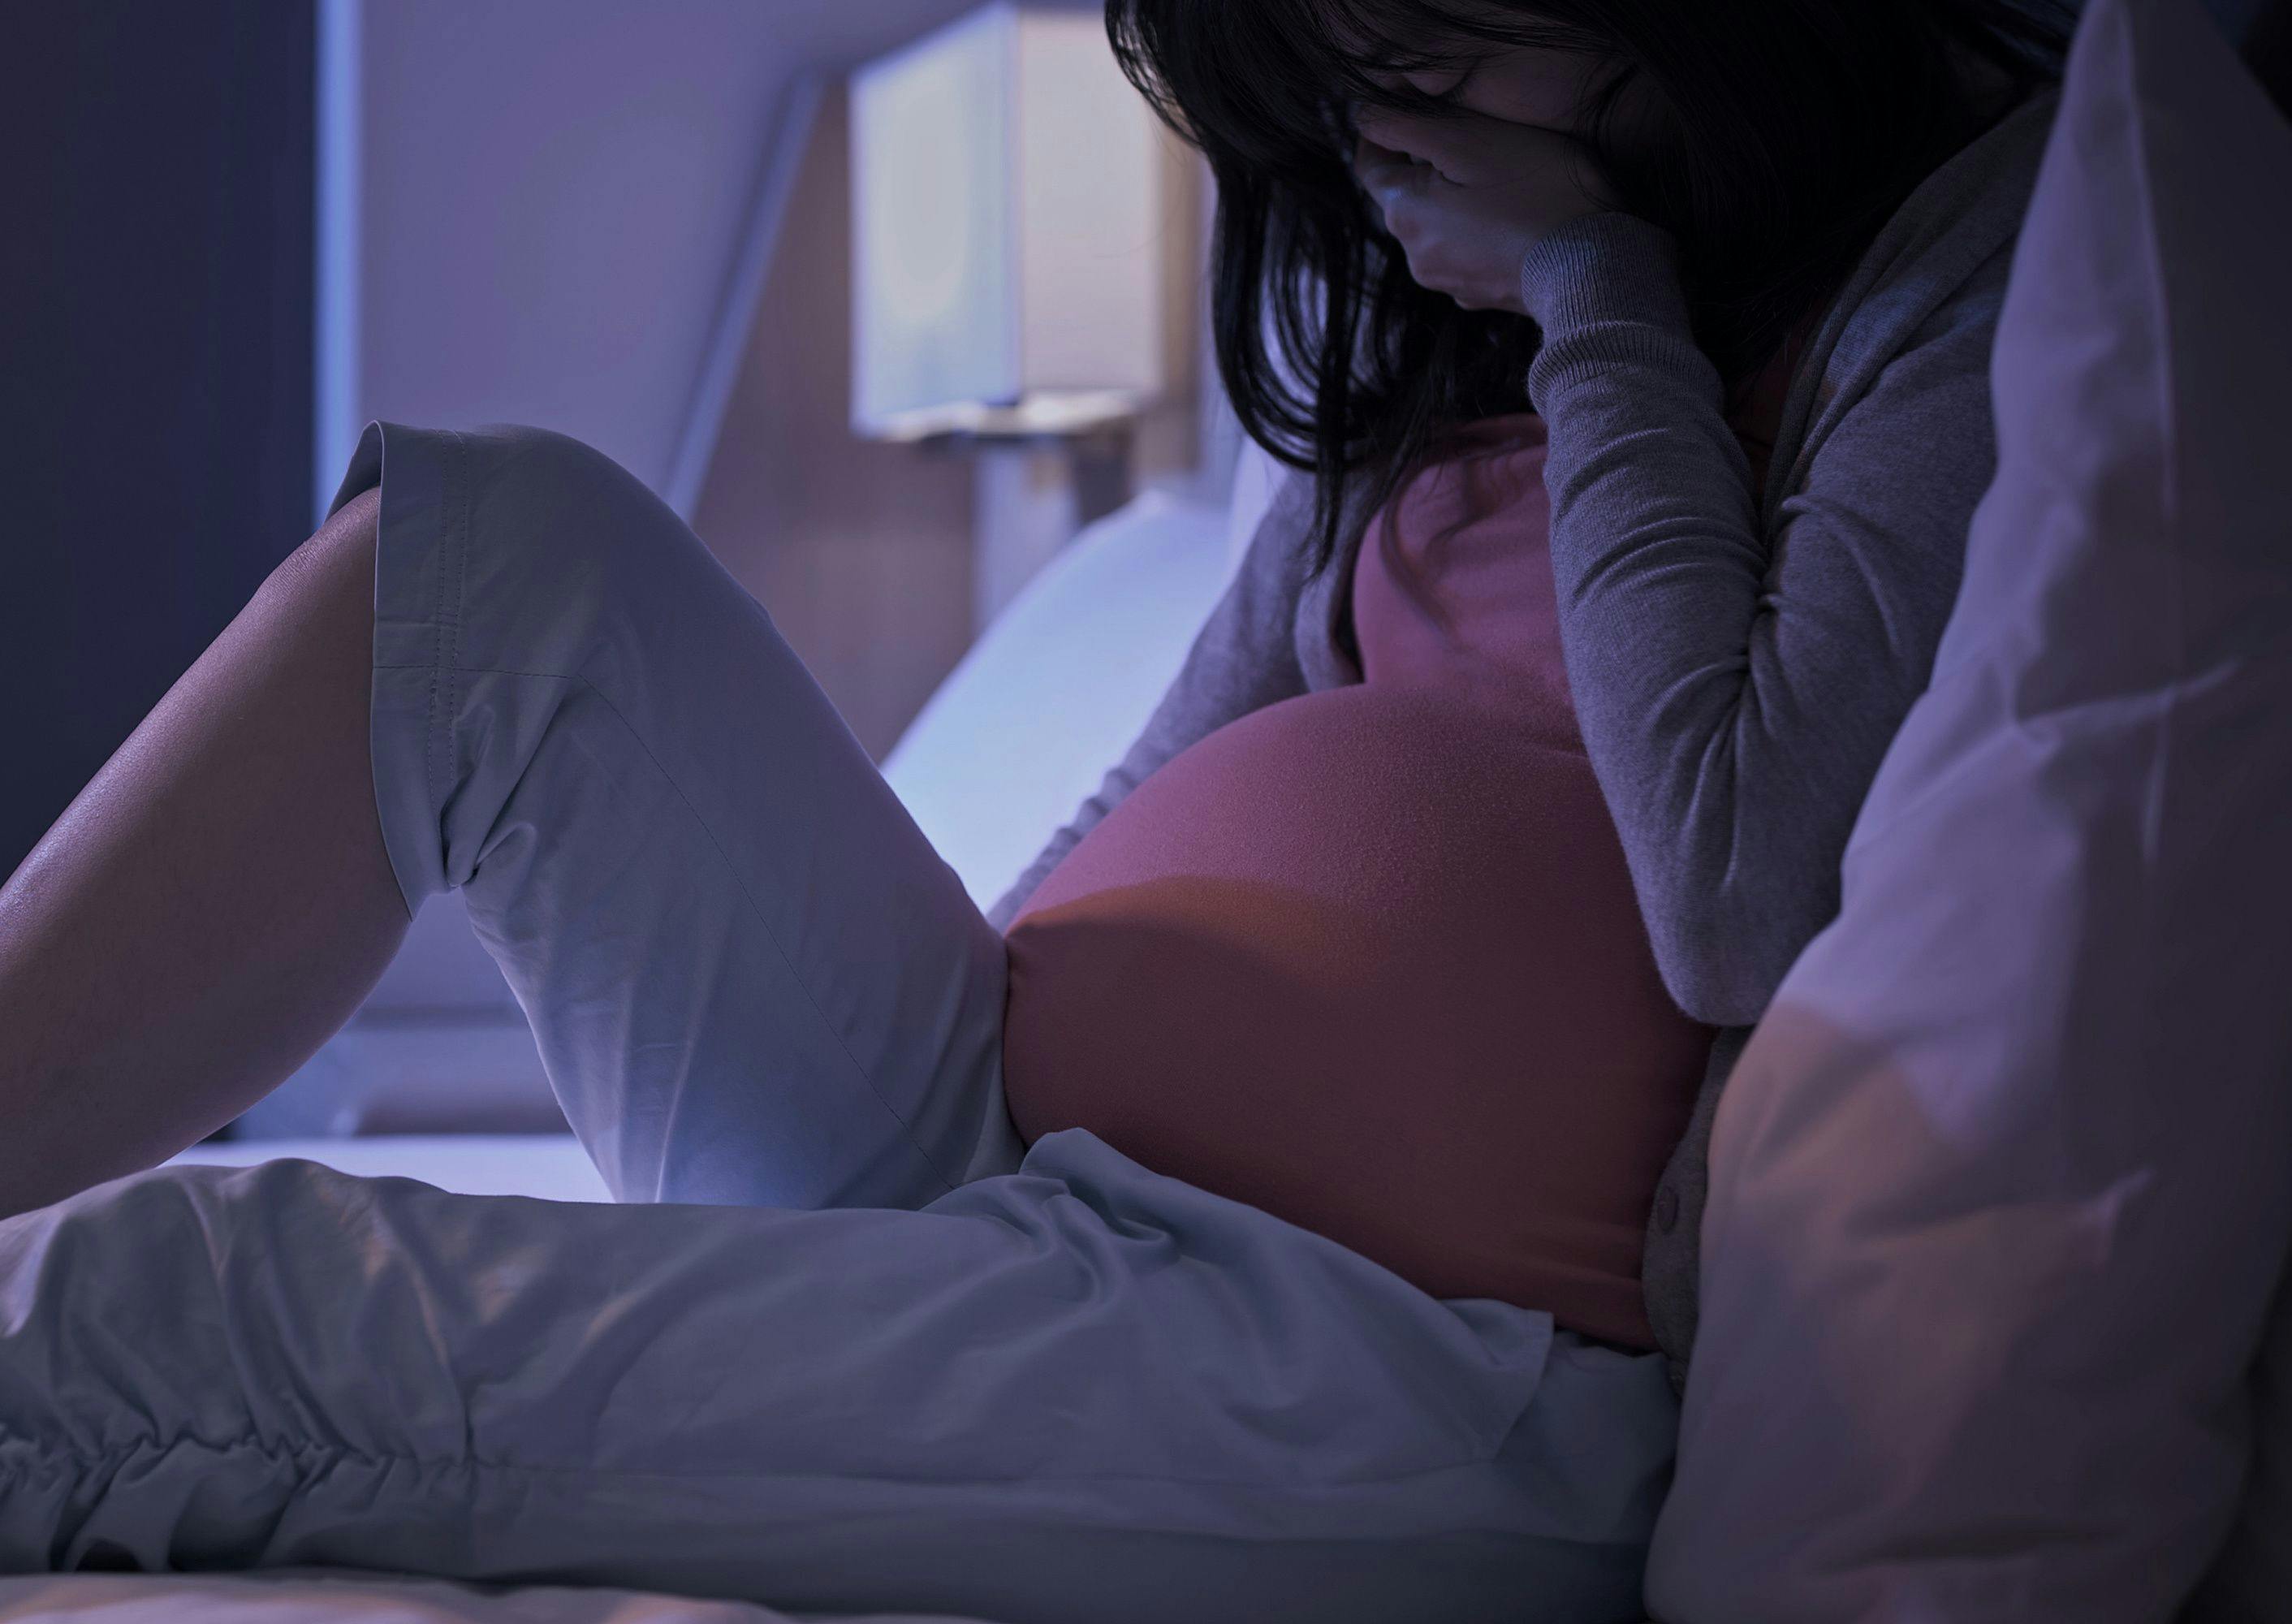 pregnant woman feel depression | Image Credit: ryanking999 - stock.adobe.com